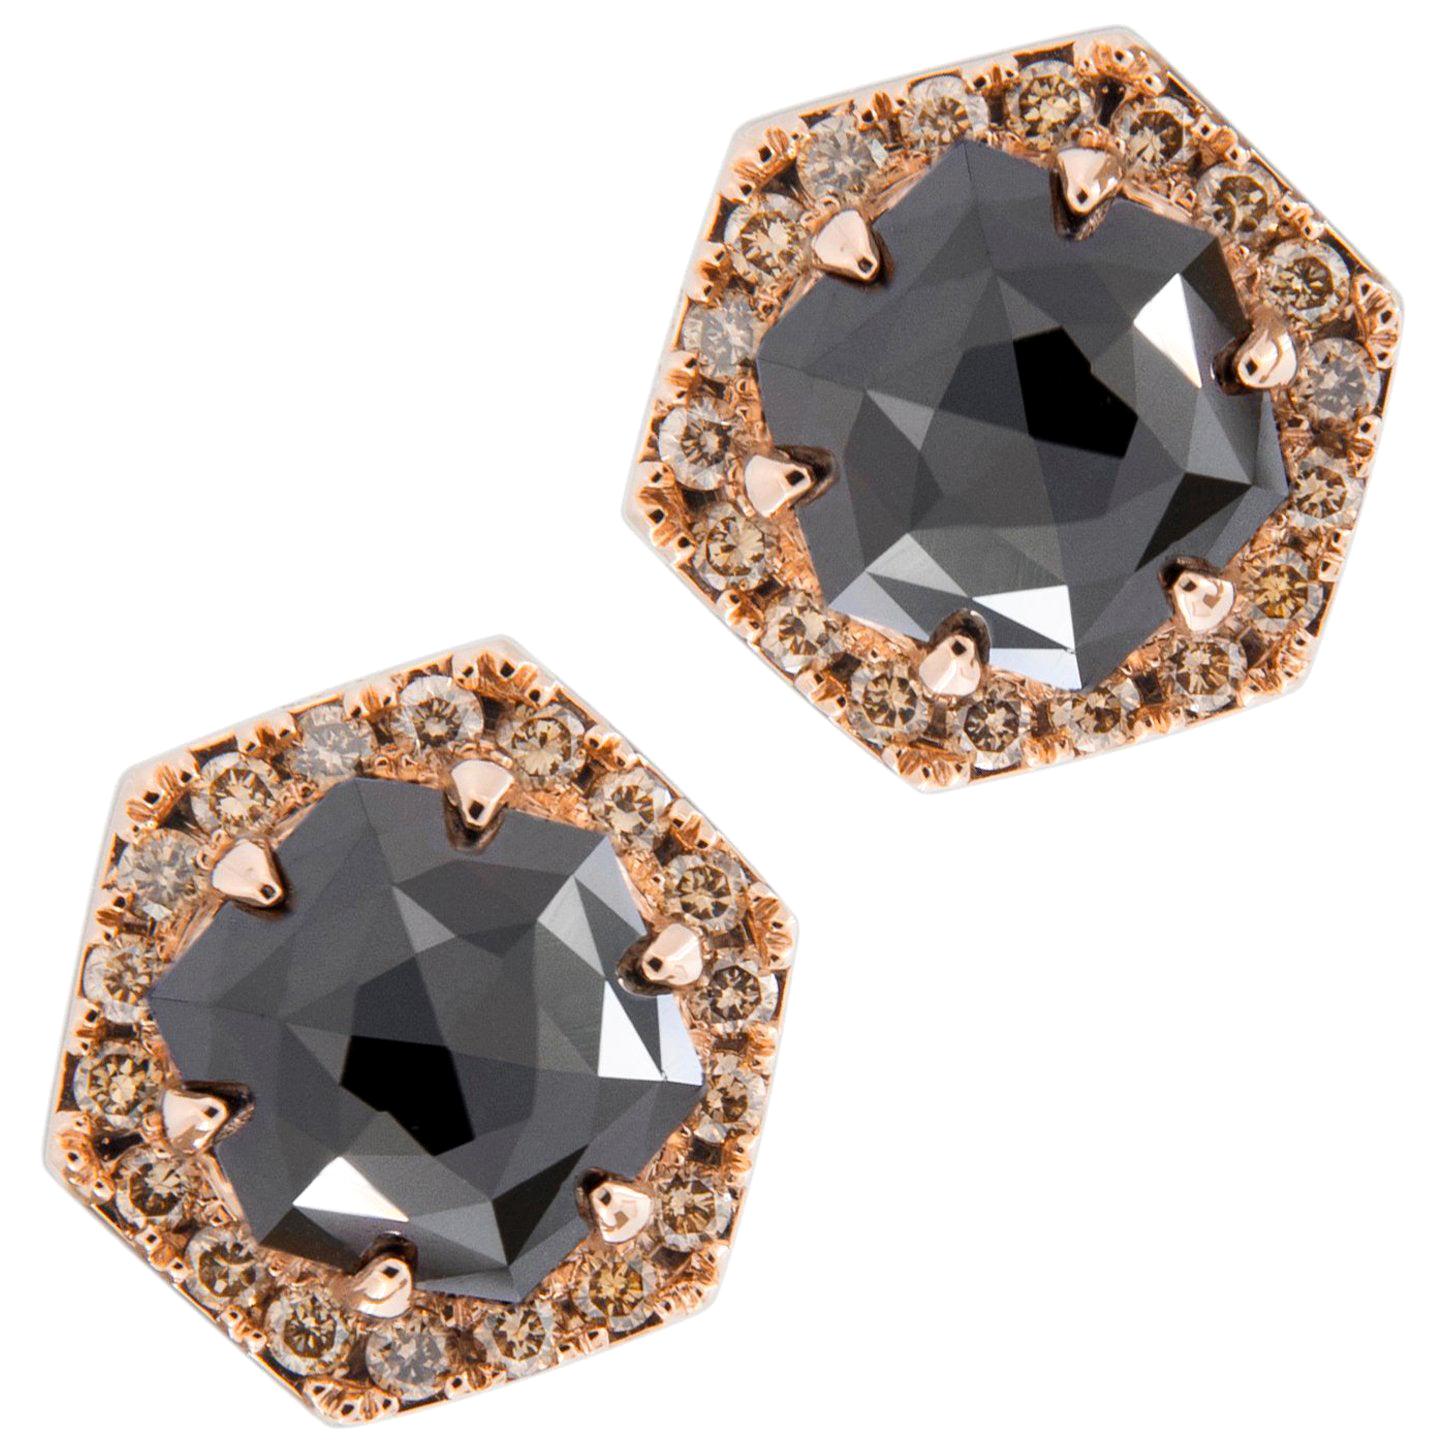 Alex Jona Rose Cut Black Diamond Brown Diamond 18 Karat Rose Gold Stud Earrings